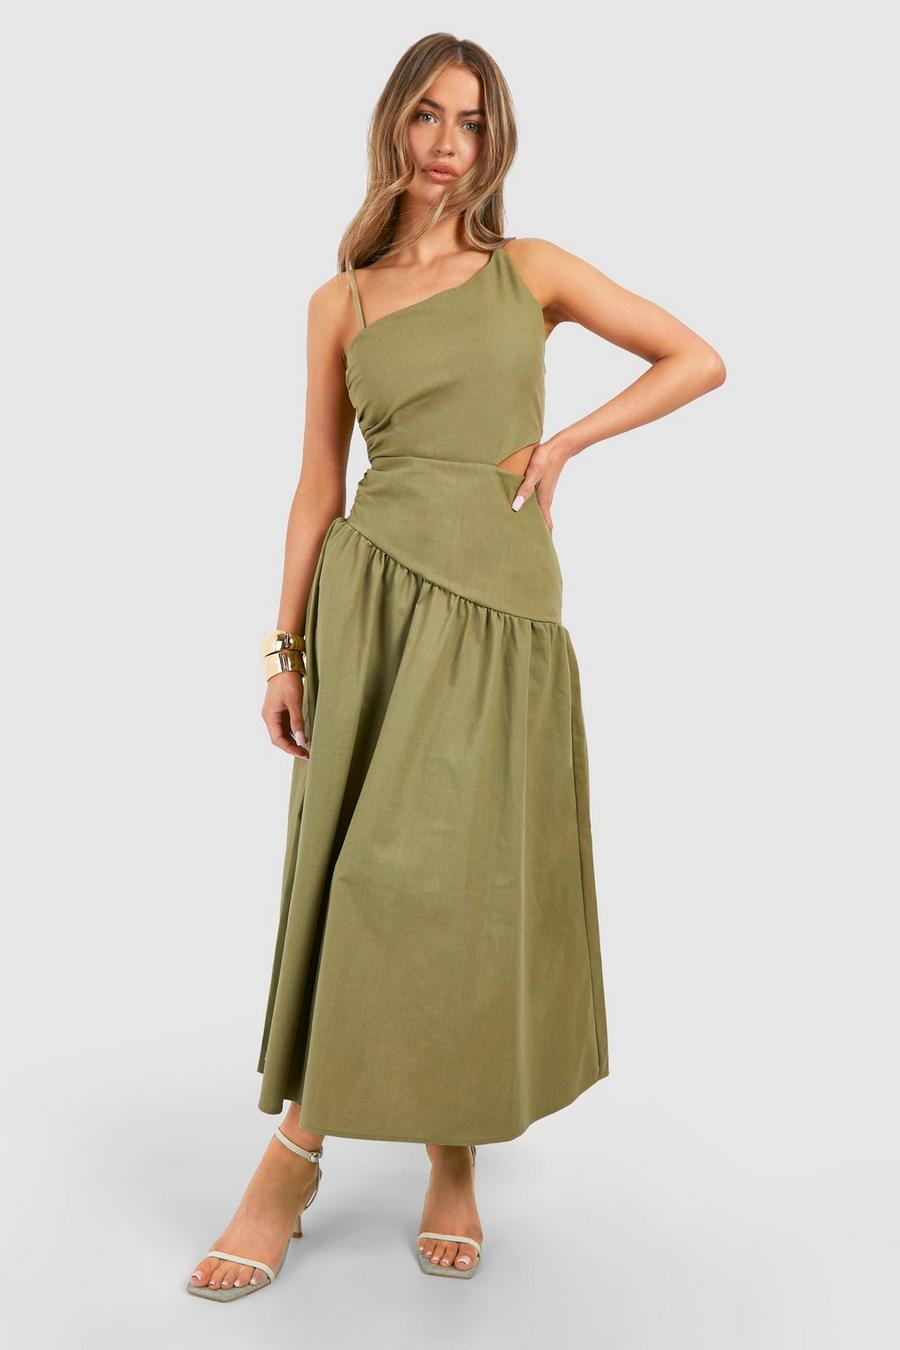 Olive Linen Cut Out Asymmetric Midaxi Dress